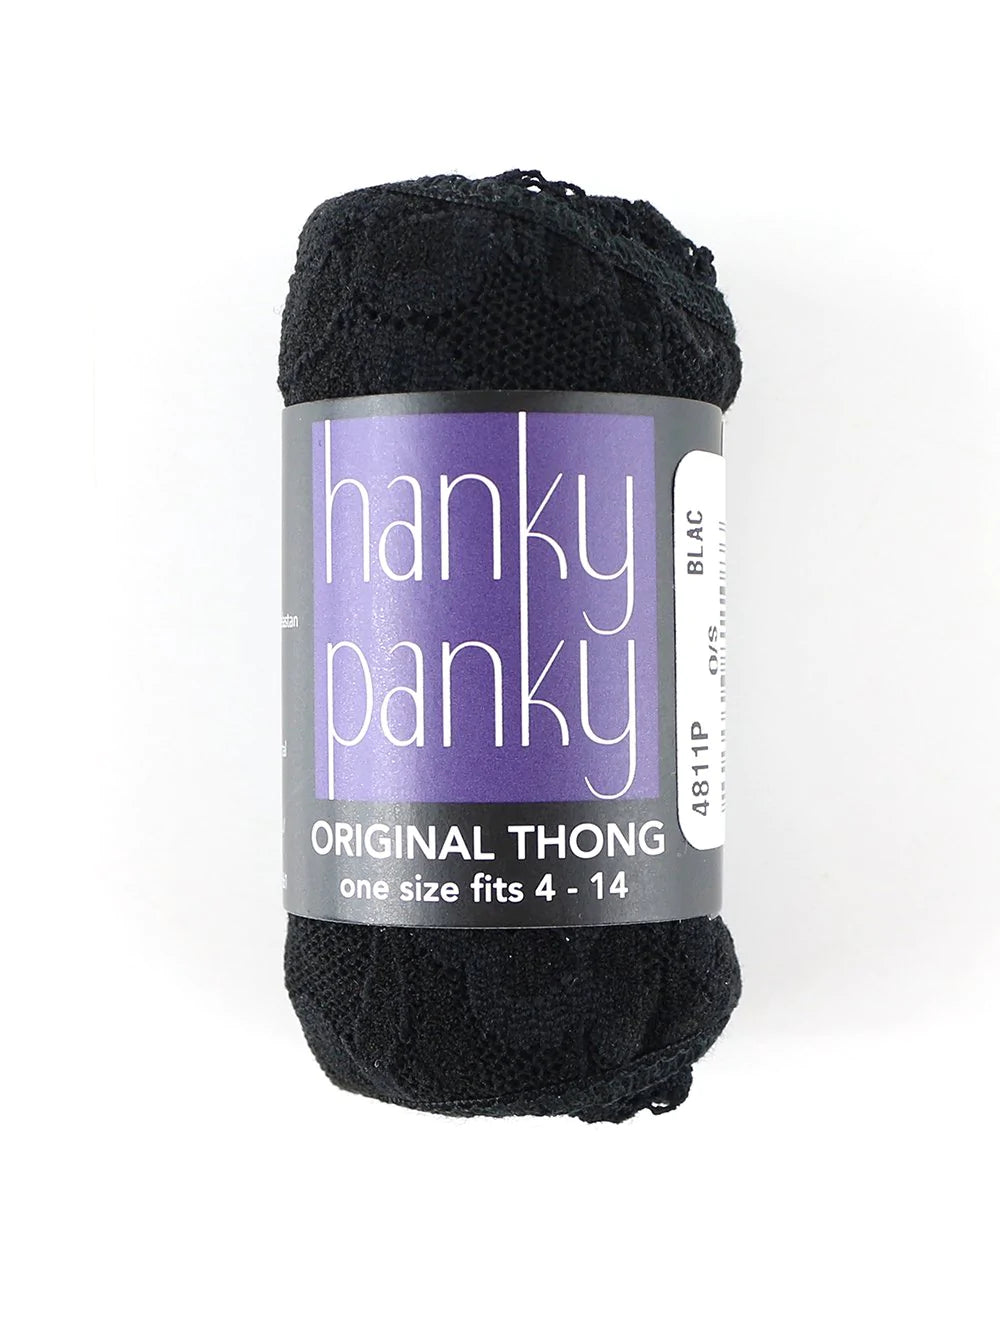 Hanky Panky Signature Lace Original Thong | Harrods CA